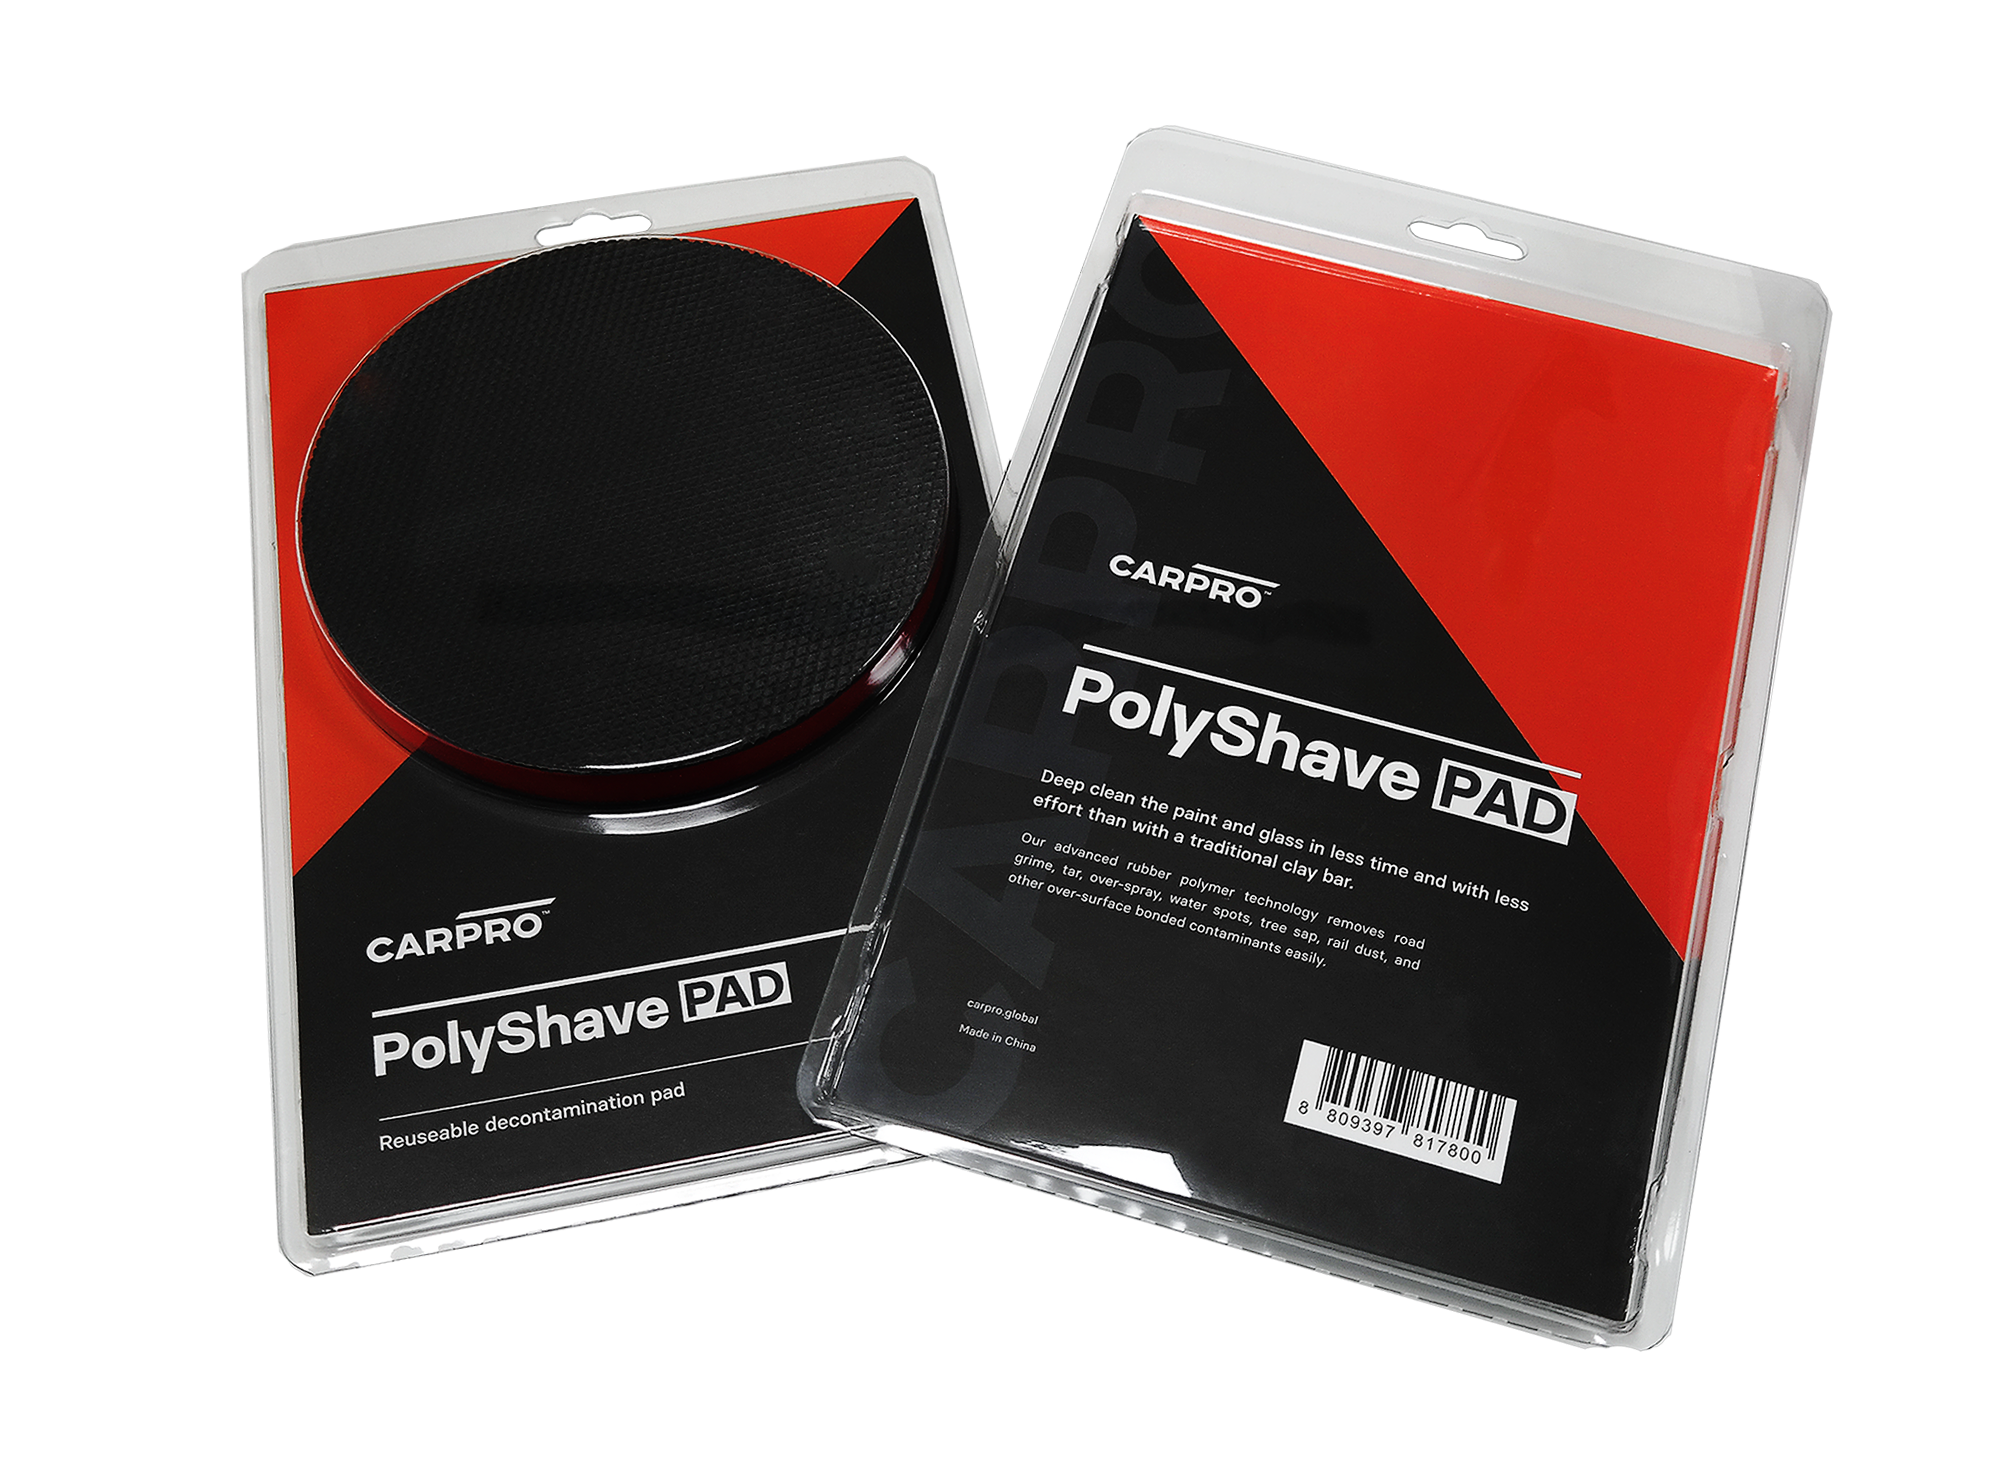 CARPRO - Polyshave Pad (Decontamination pad)